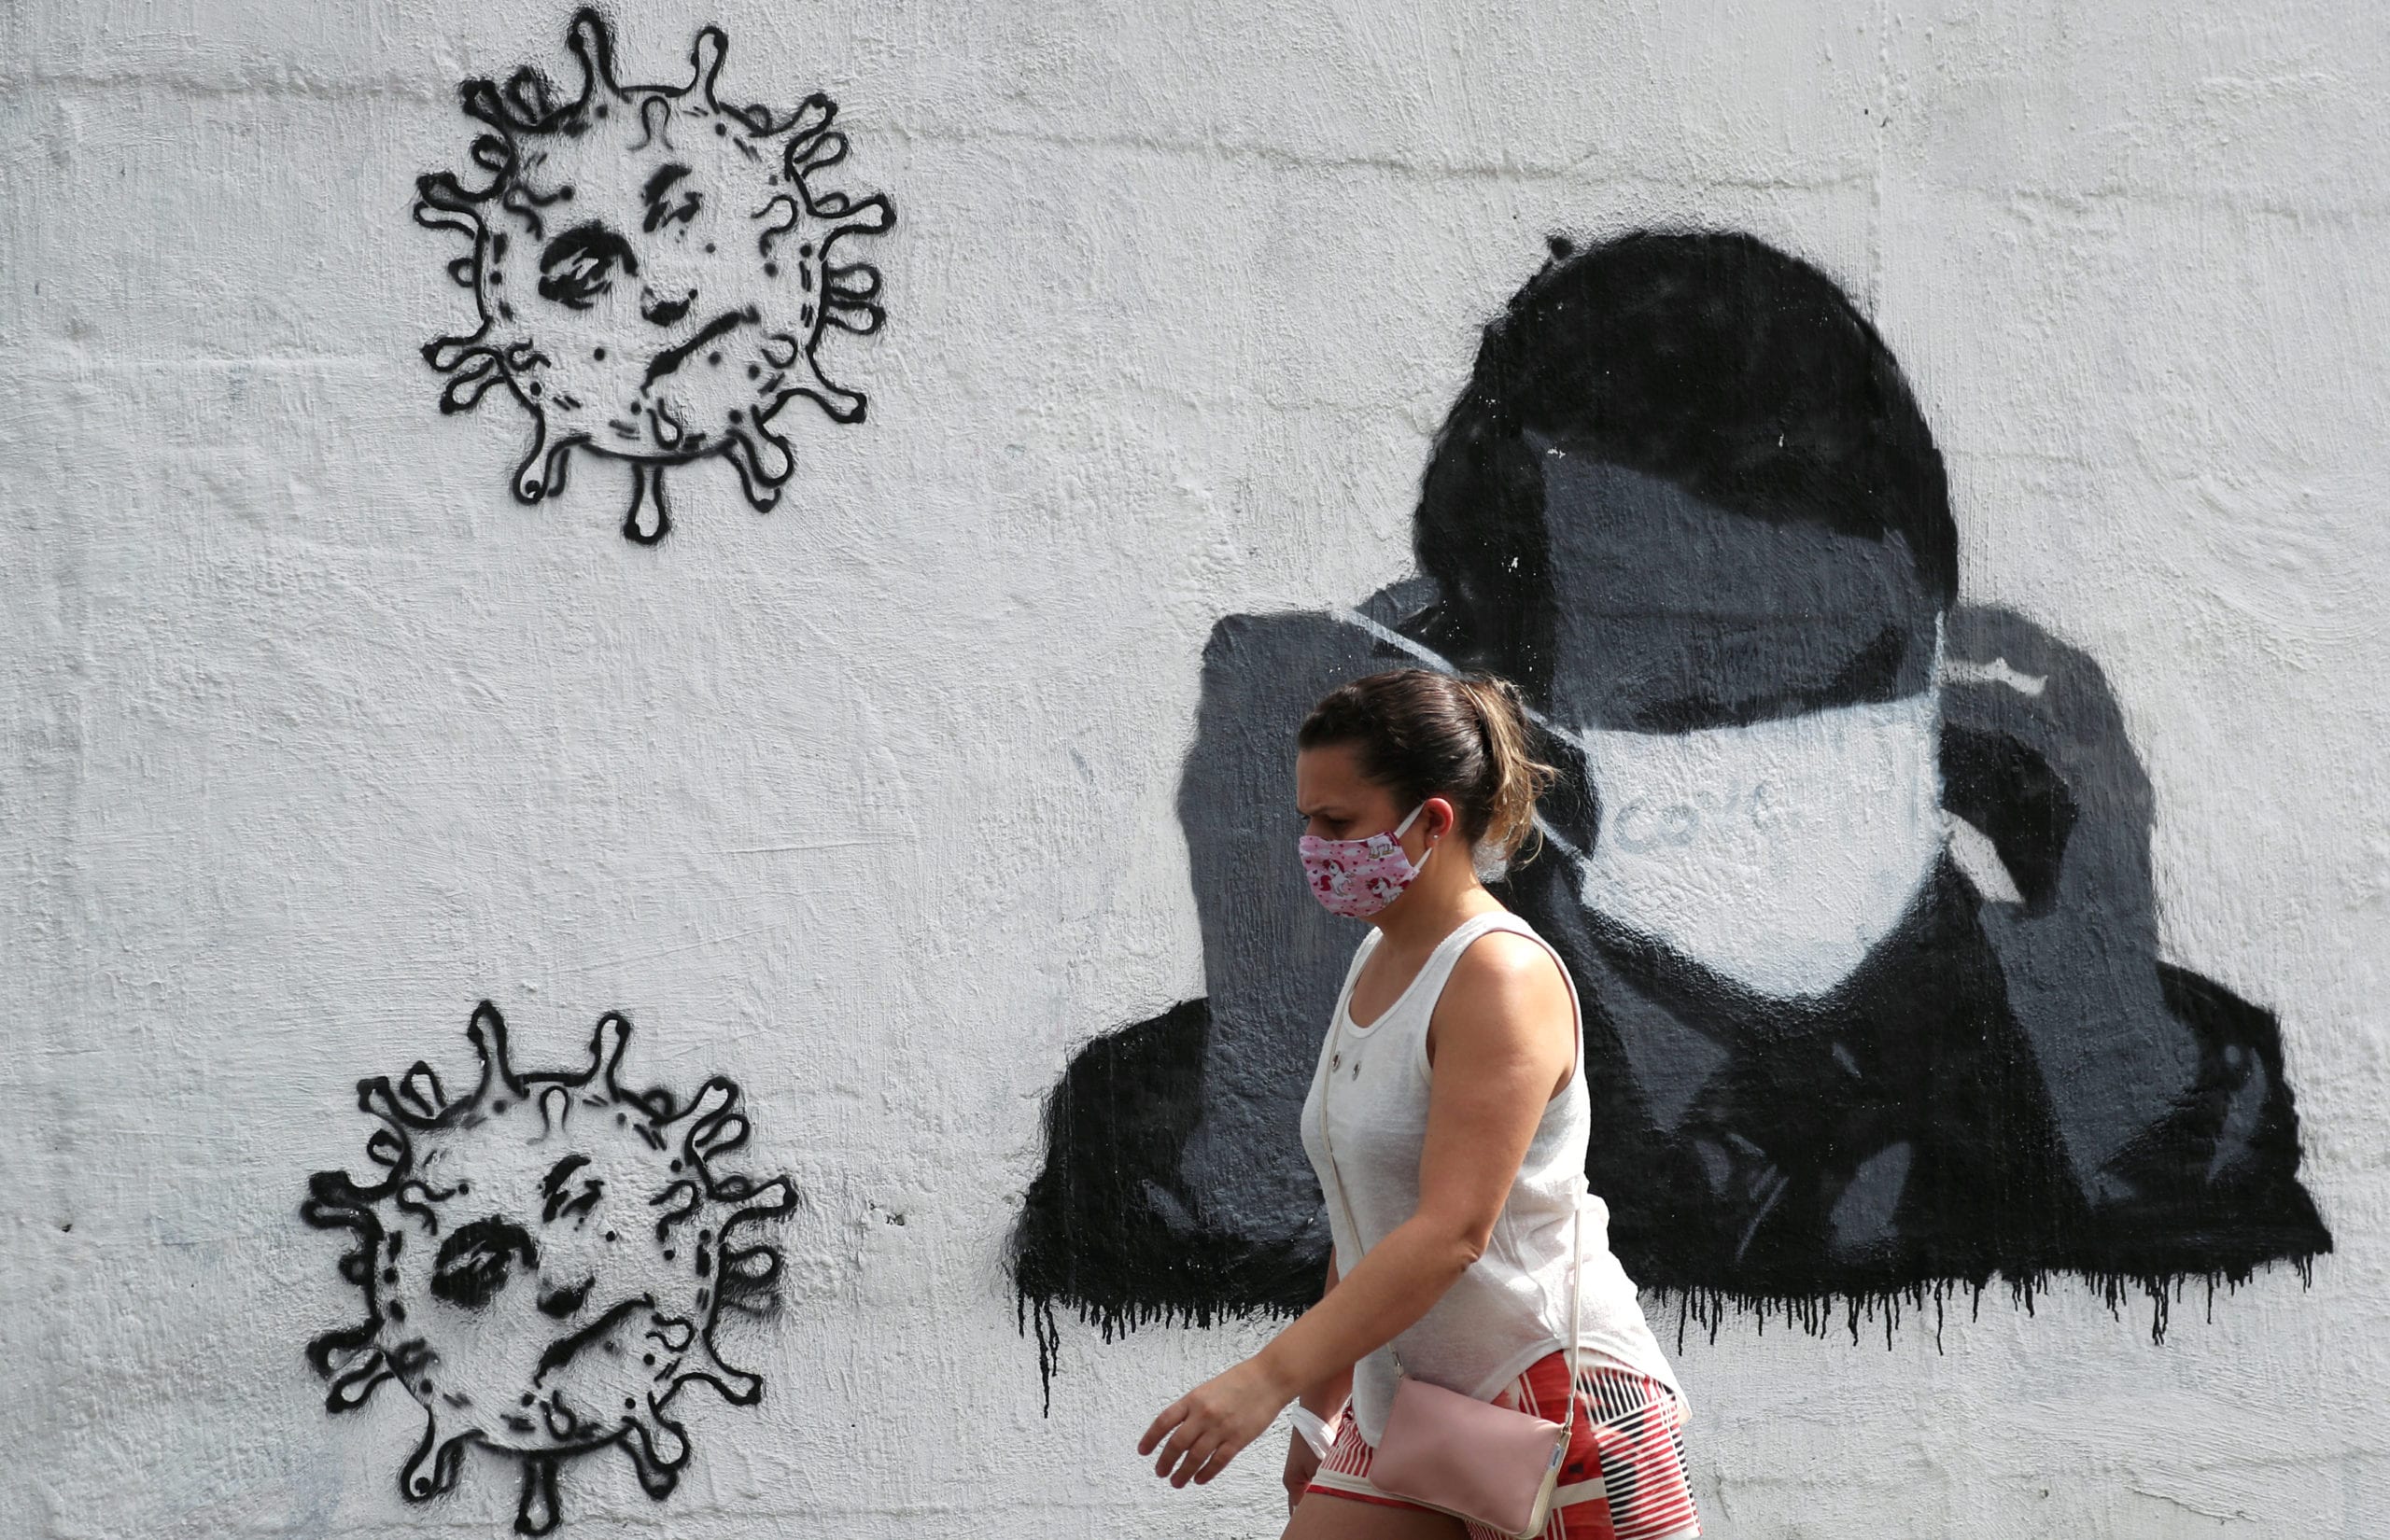 FILE PHOTO: A woman walks past graffiti depicting Brazil's President Jair Bolsonaro adjusting his protective face mask and viruses, amid the coronavirus  outbreak in Rio de Janeiro, Brazil July 2, 2020. REUTERS/Sergio Moraes/File Photo